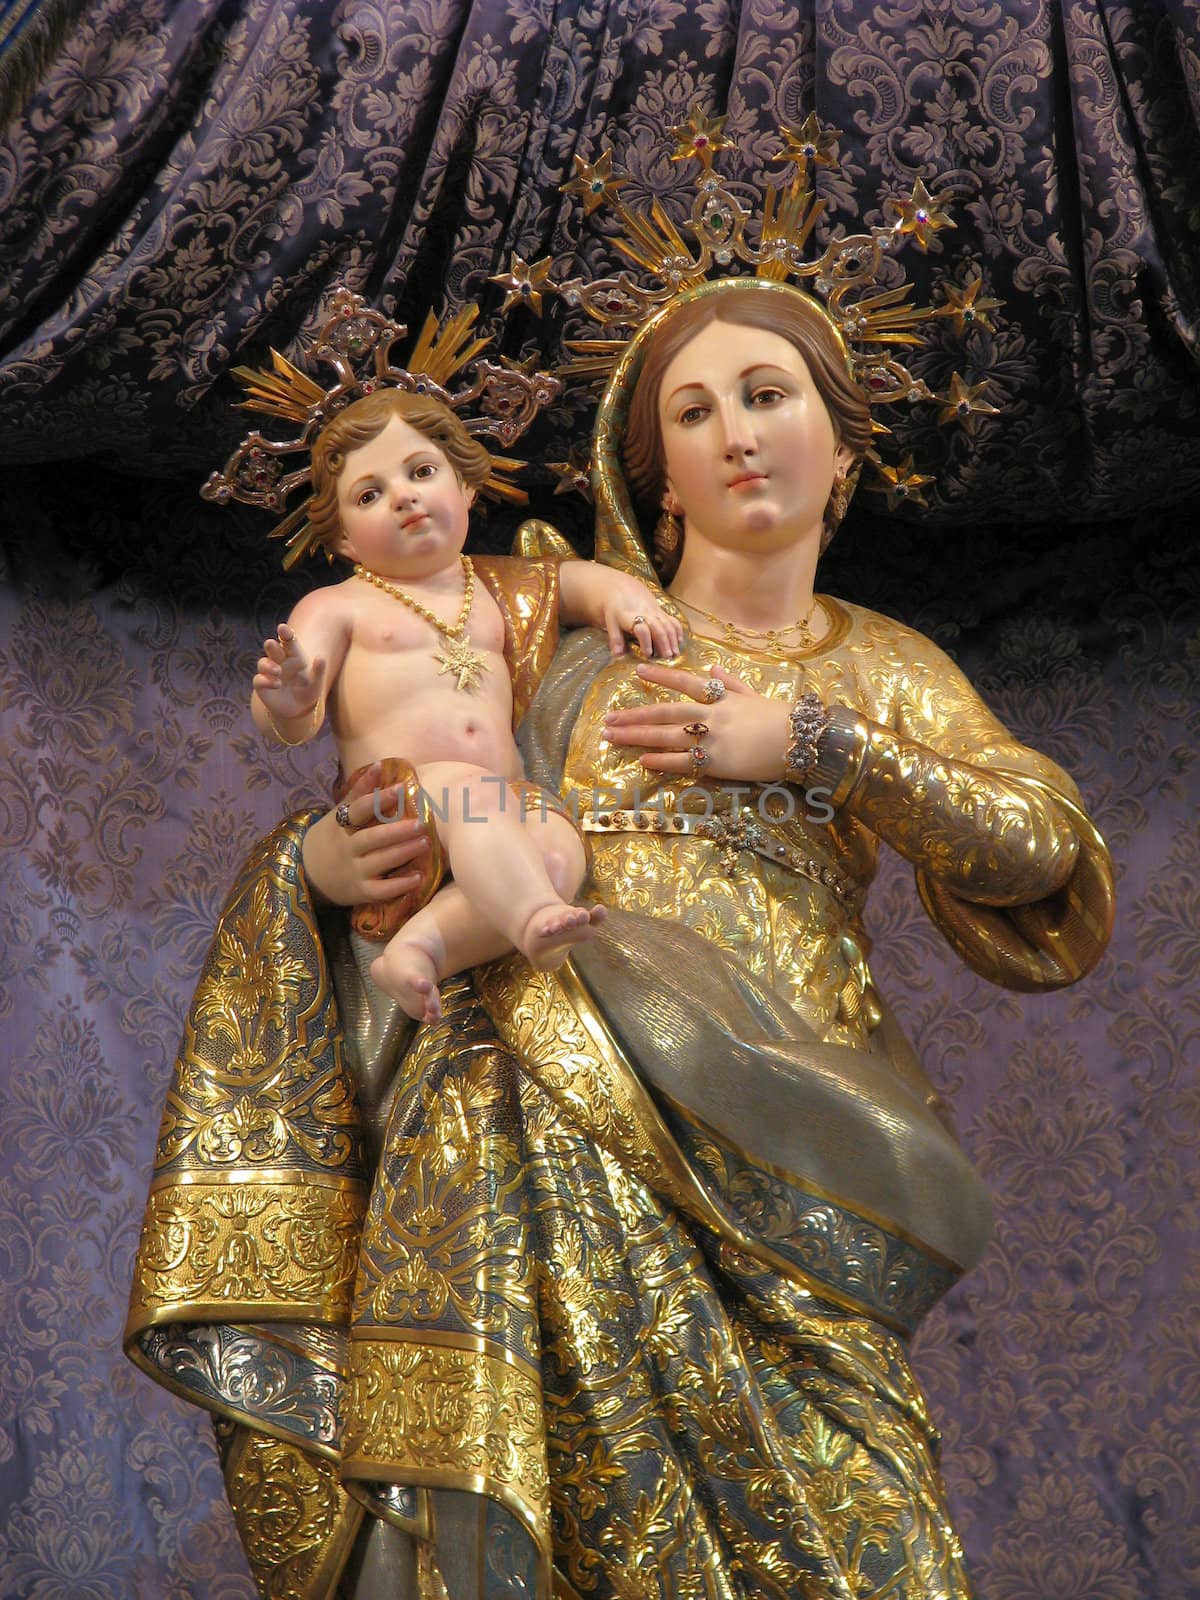 Our Lady of Graces by fajjenzu